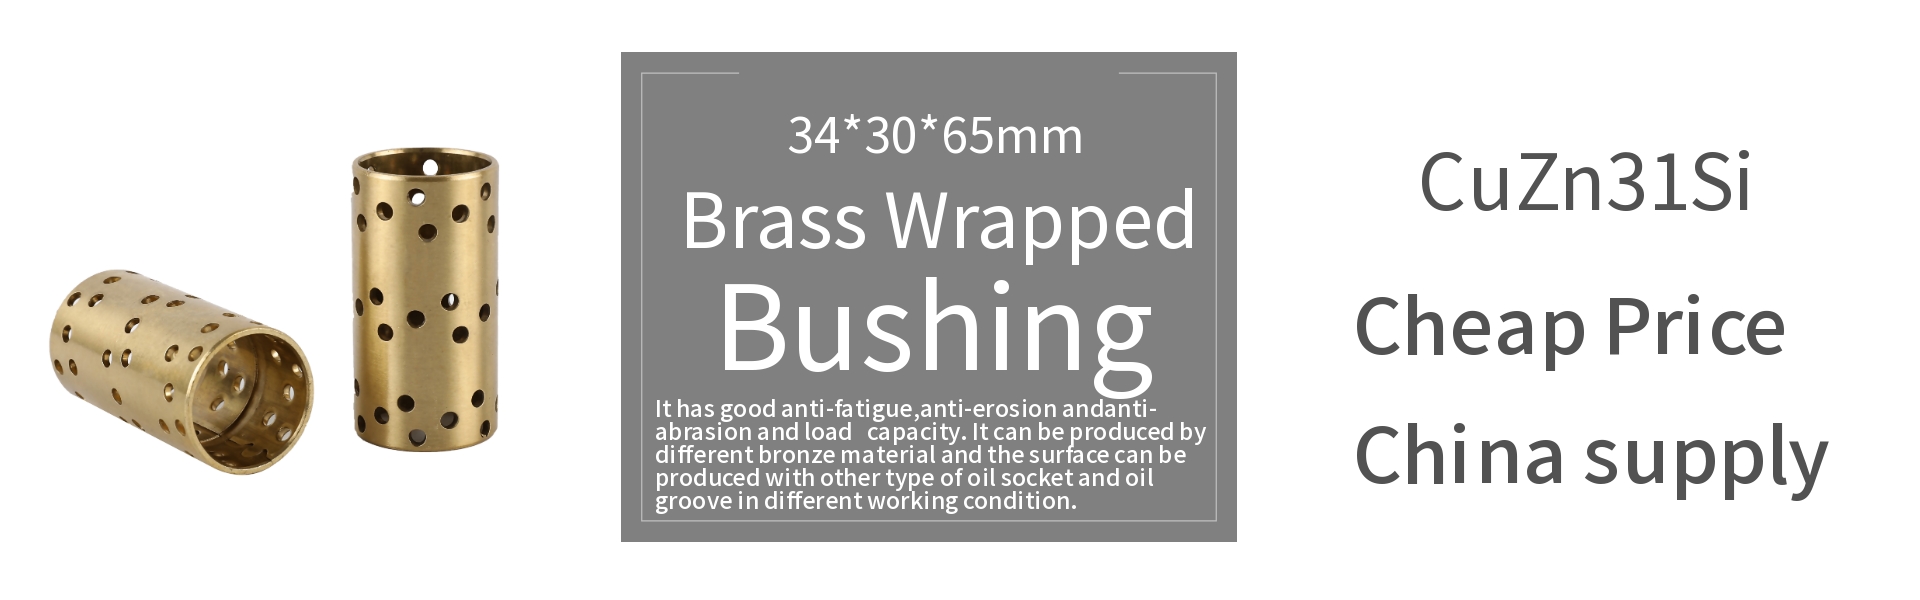 brass wrapped bushing